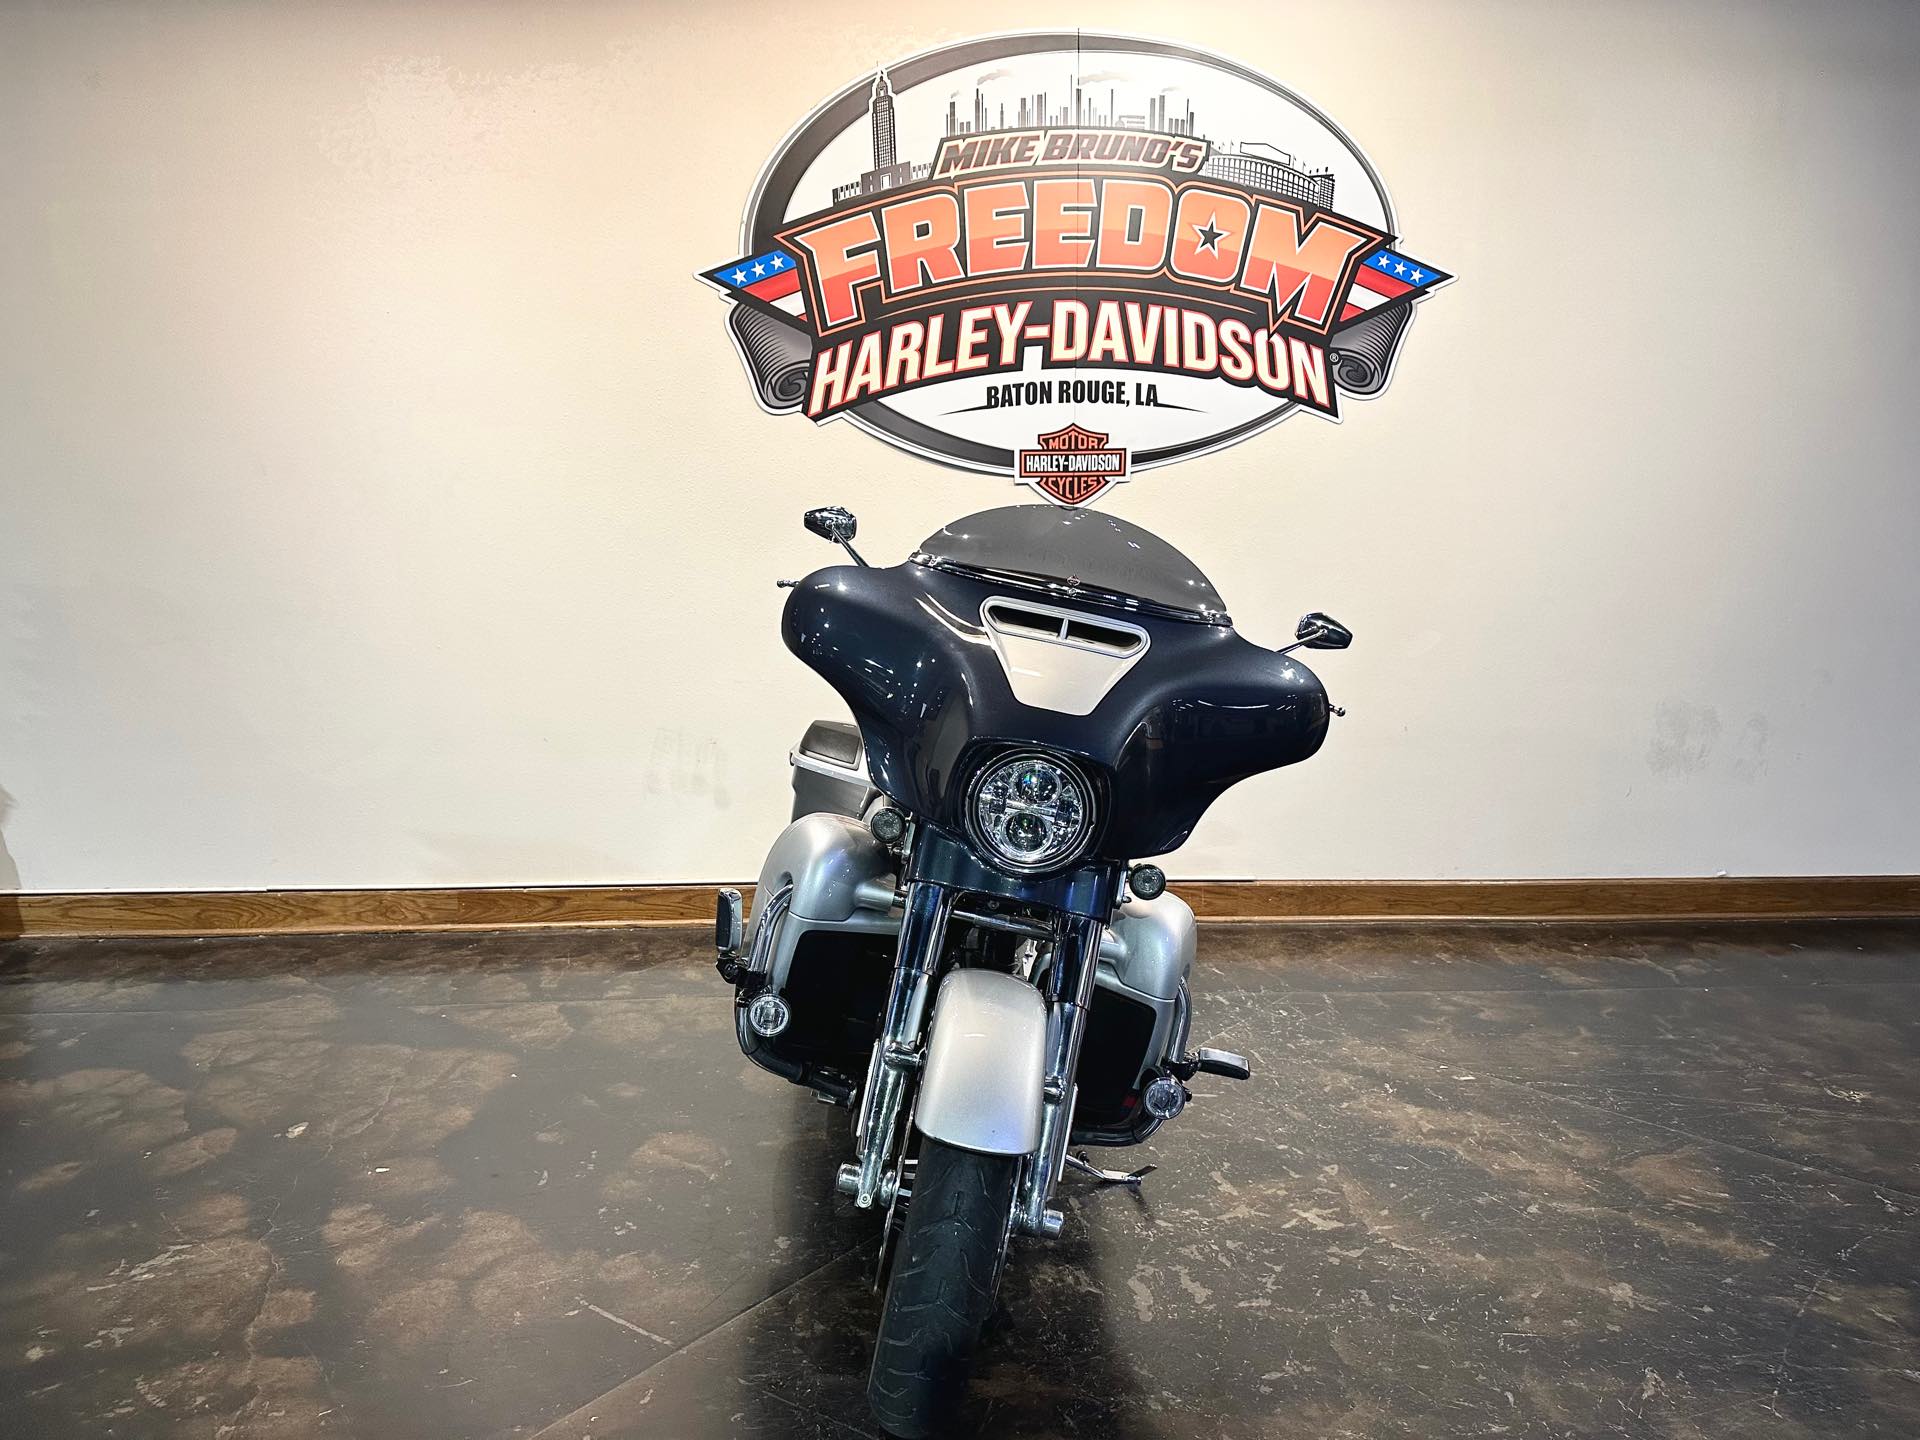 2019 Harley-Davidson Street Glide CVO Street Glide at Mike Bruno's Freedom Harley-Davidson